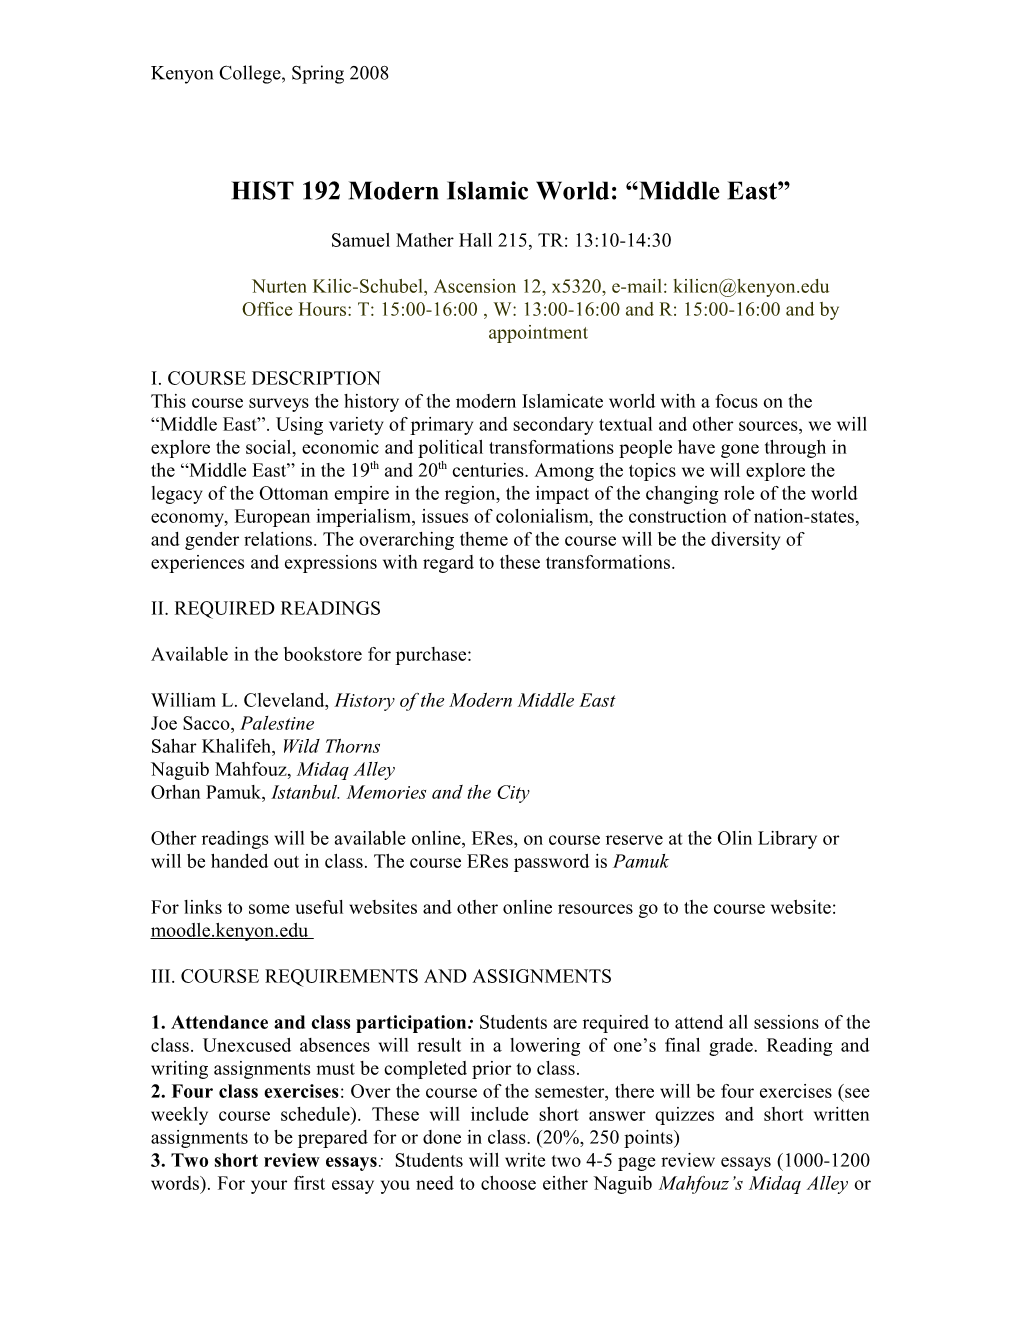 HIST 192 Modern Islamic World: Middle East